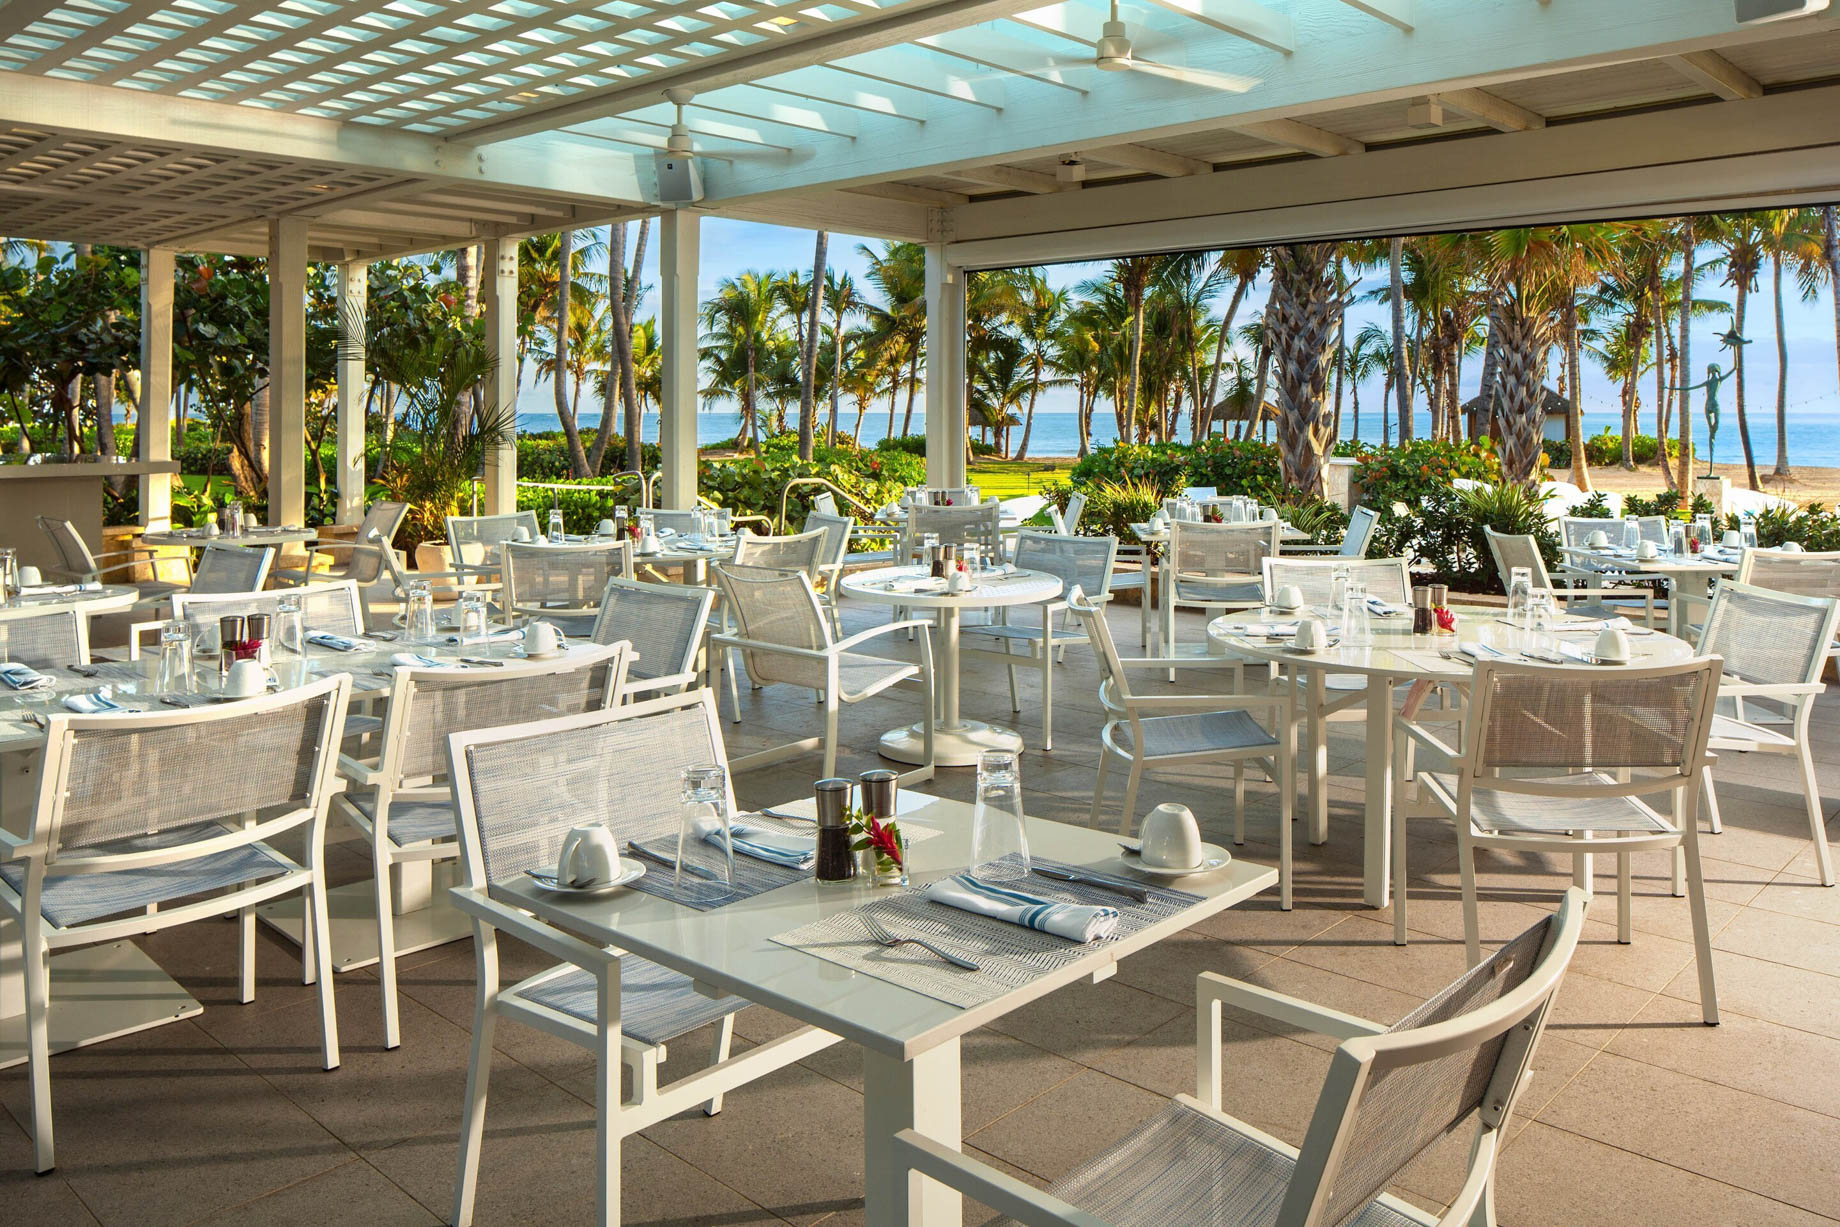 The St. Regis Bahia Beach Resort – Rio Grande, Puerto Rico – Seagrapes Restaurant